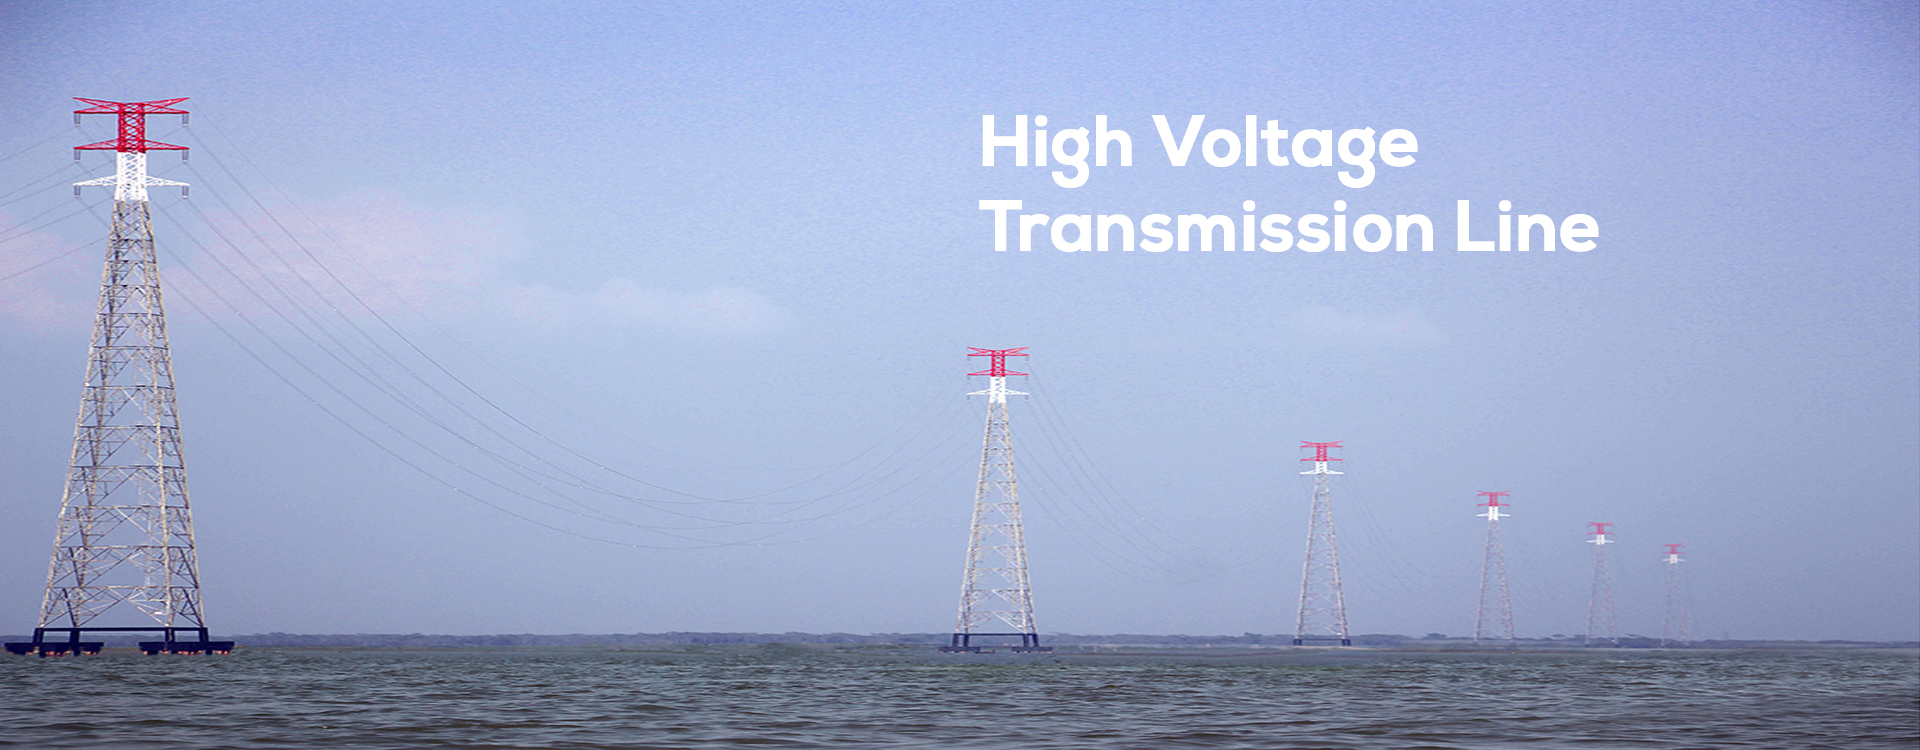 Hight-Voltage-Electrical-Transmission-Lines